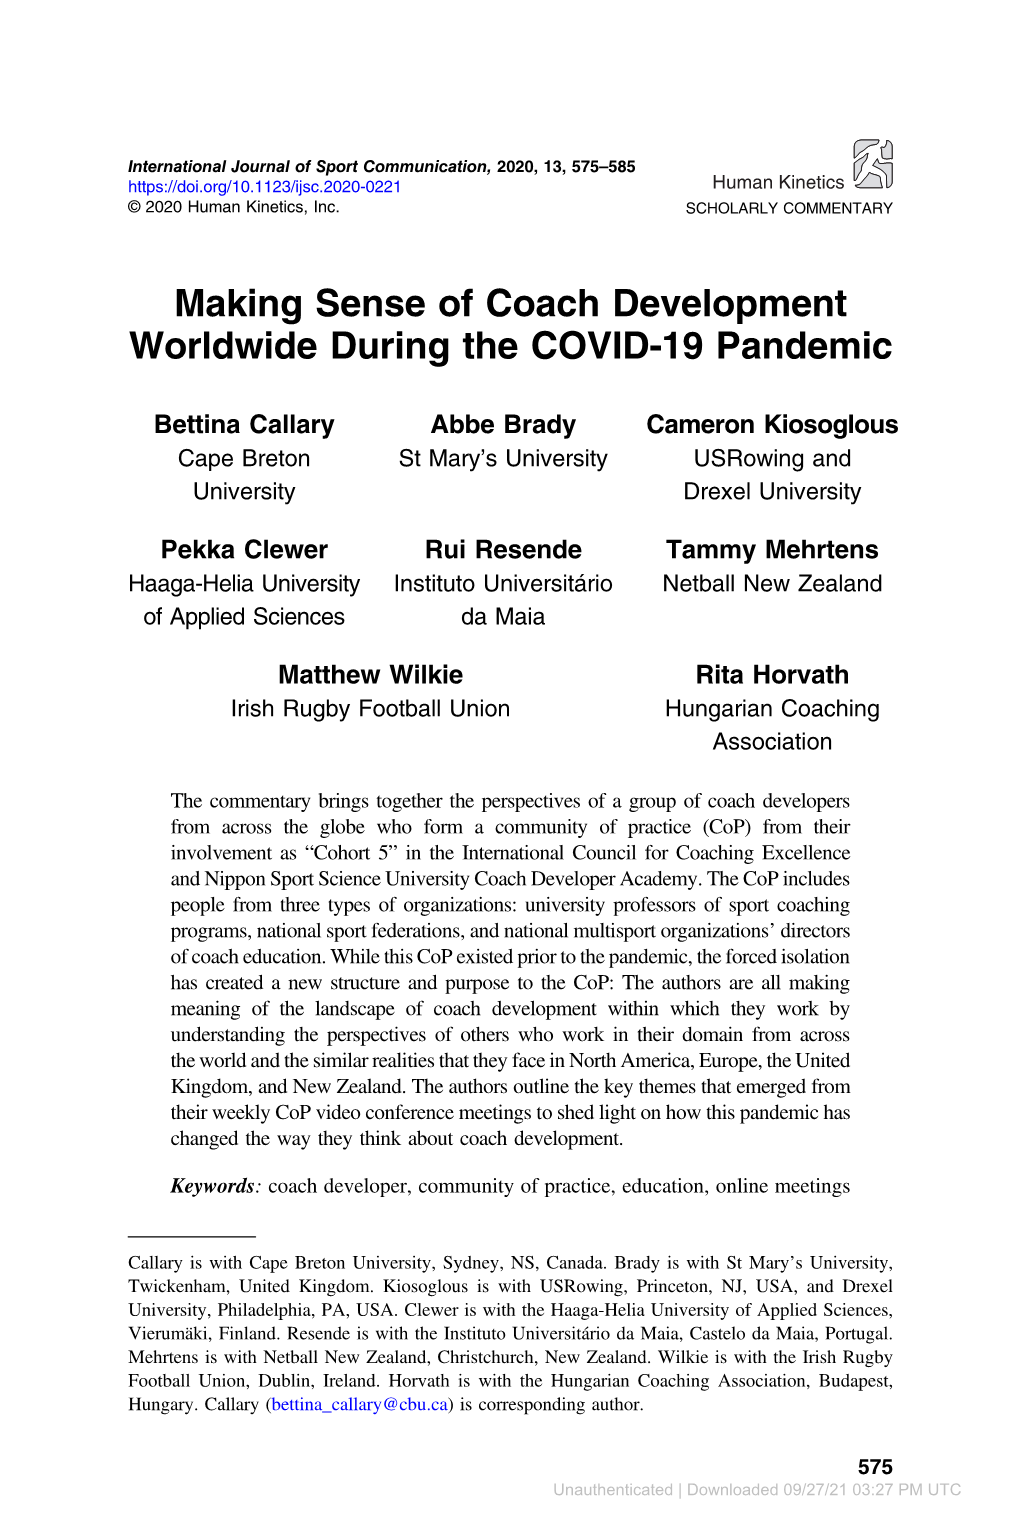 Making Sense of Coach Development Worldwide During the COVID-19 Pandemic